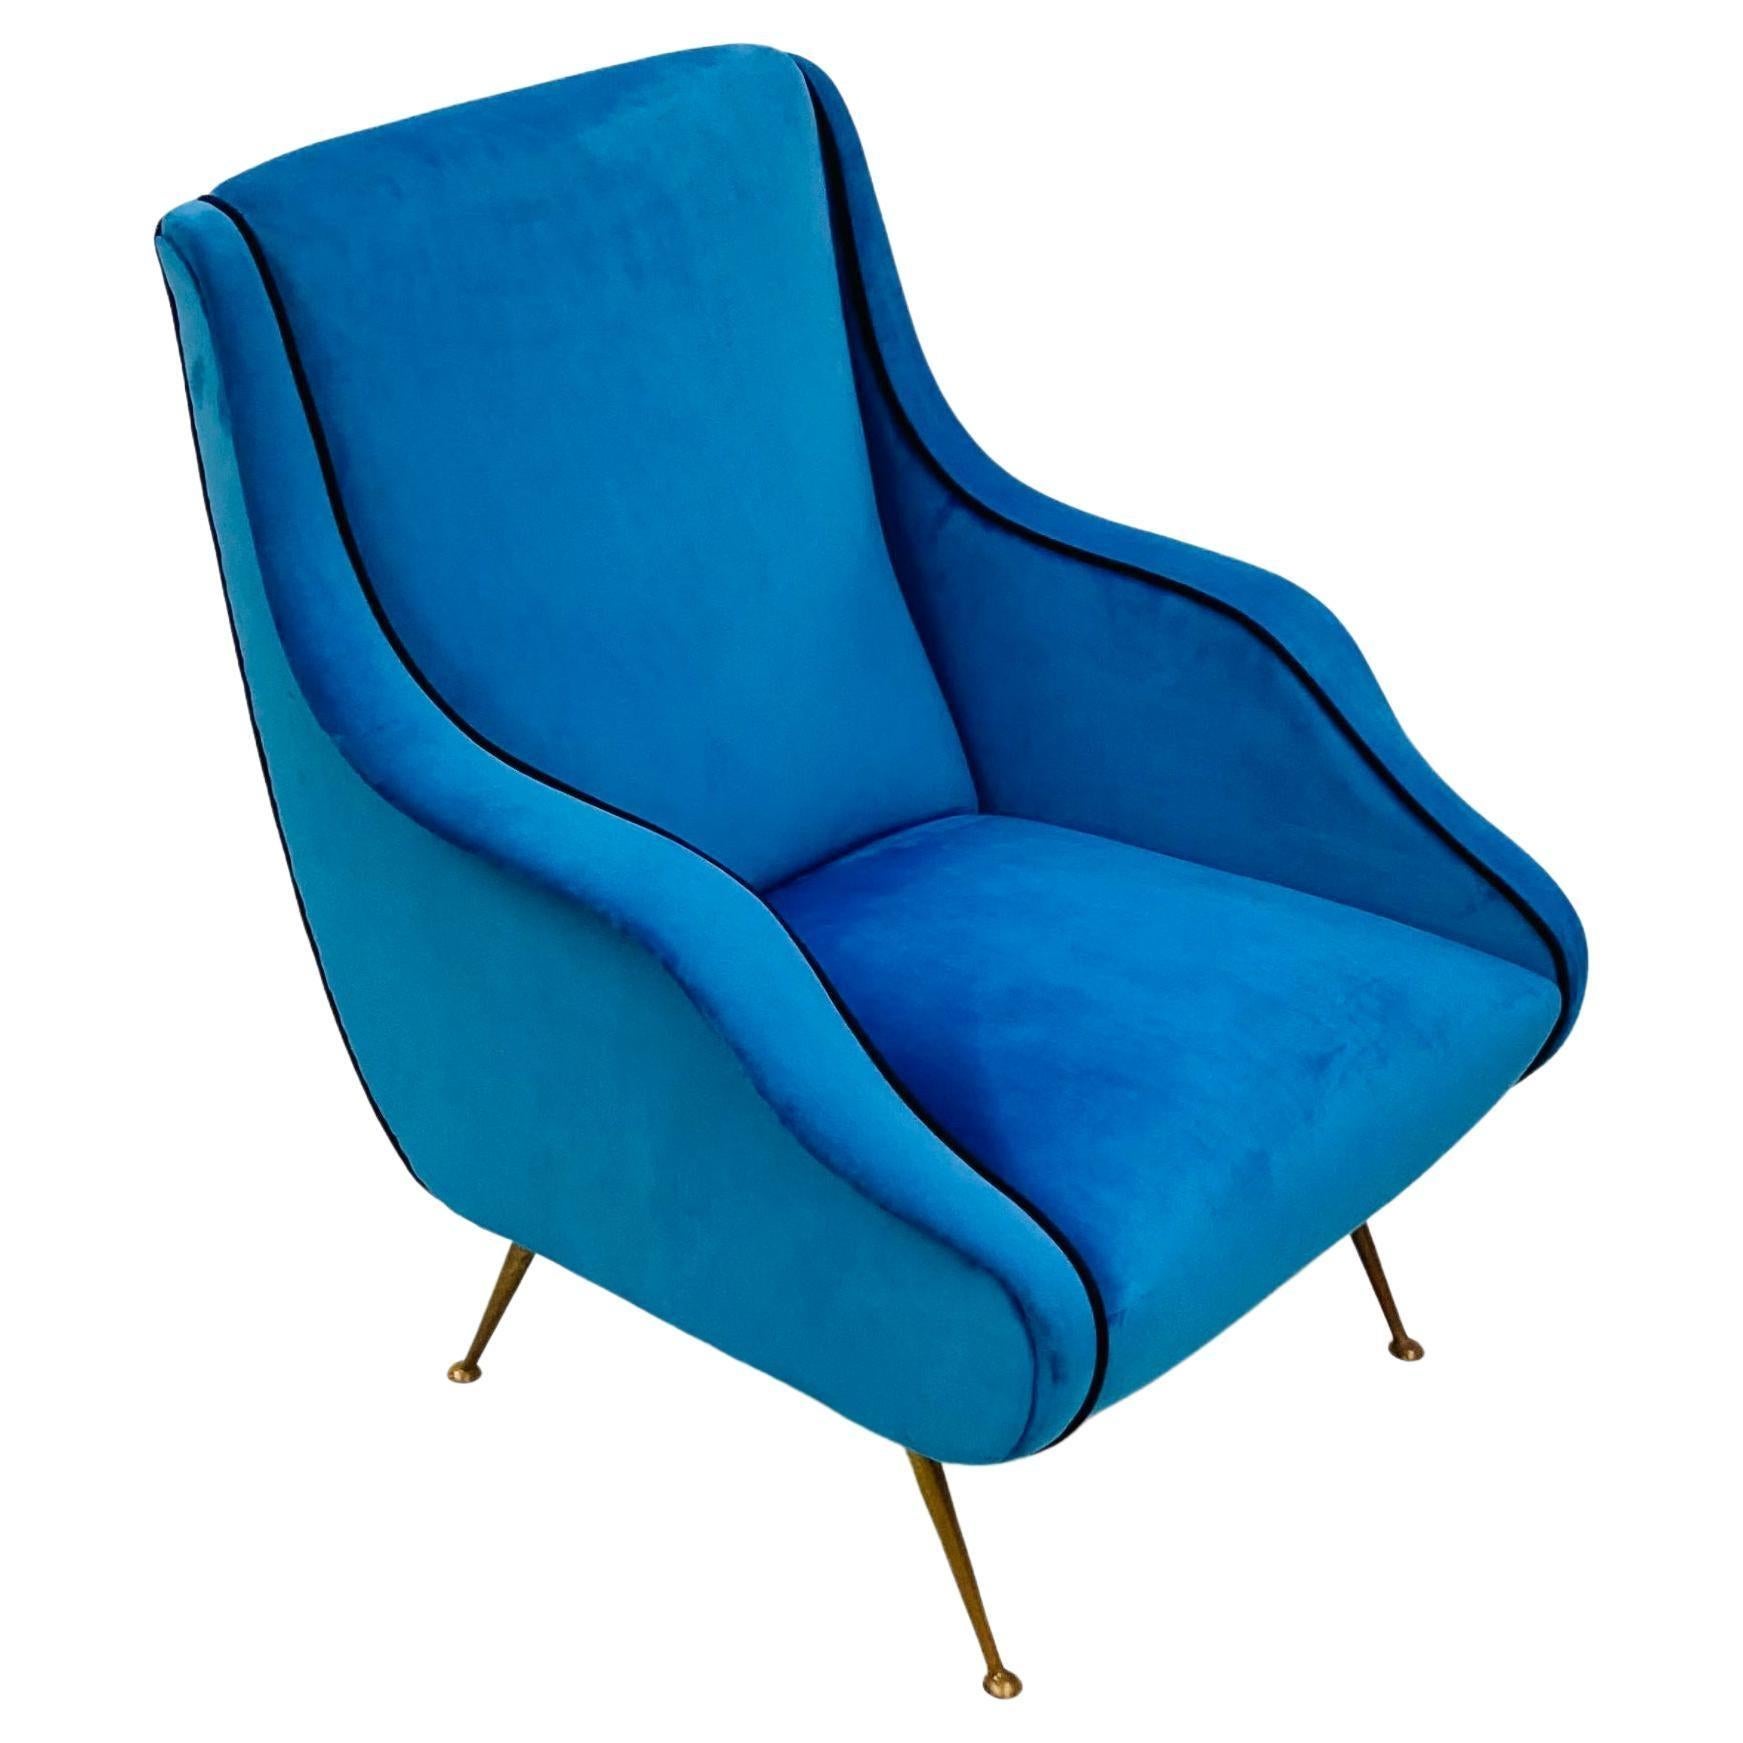 Mid-Century Modern Vintage Italian Blue Velvet Armchair with Brass Legs by Carlo de Carli, 1950s For Sale